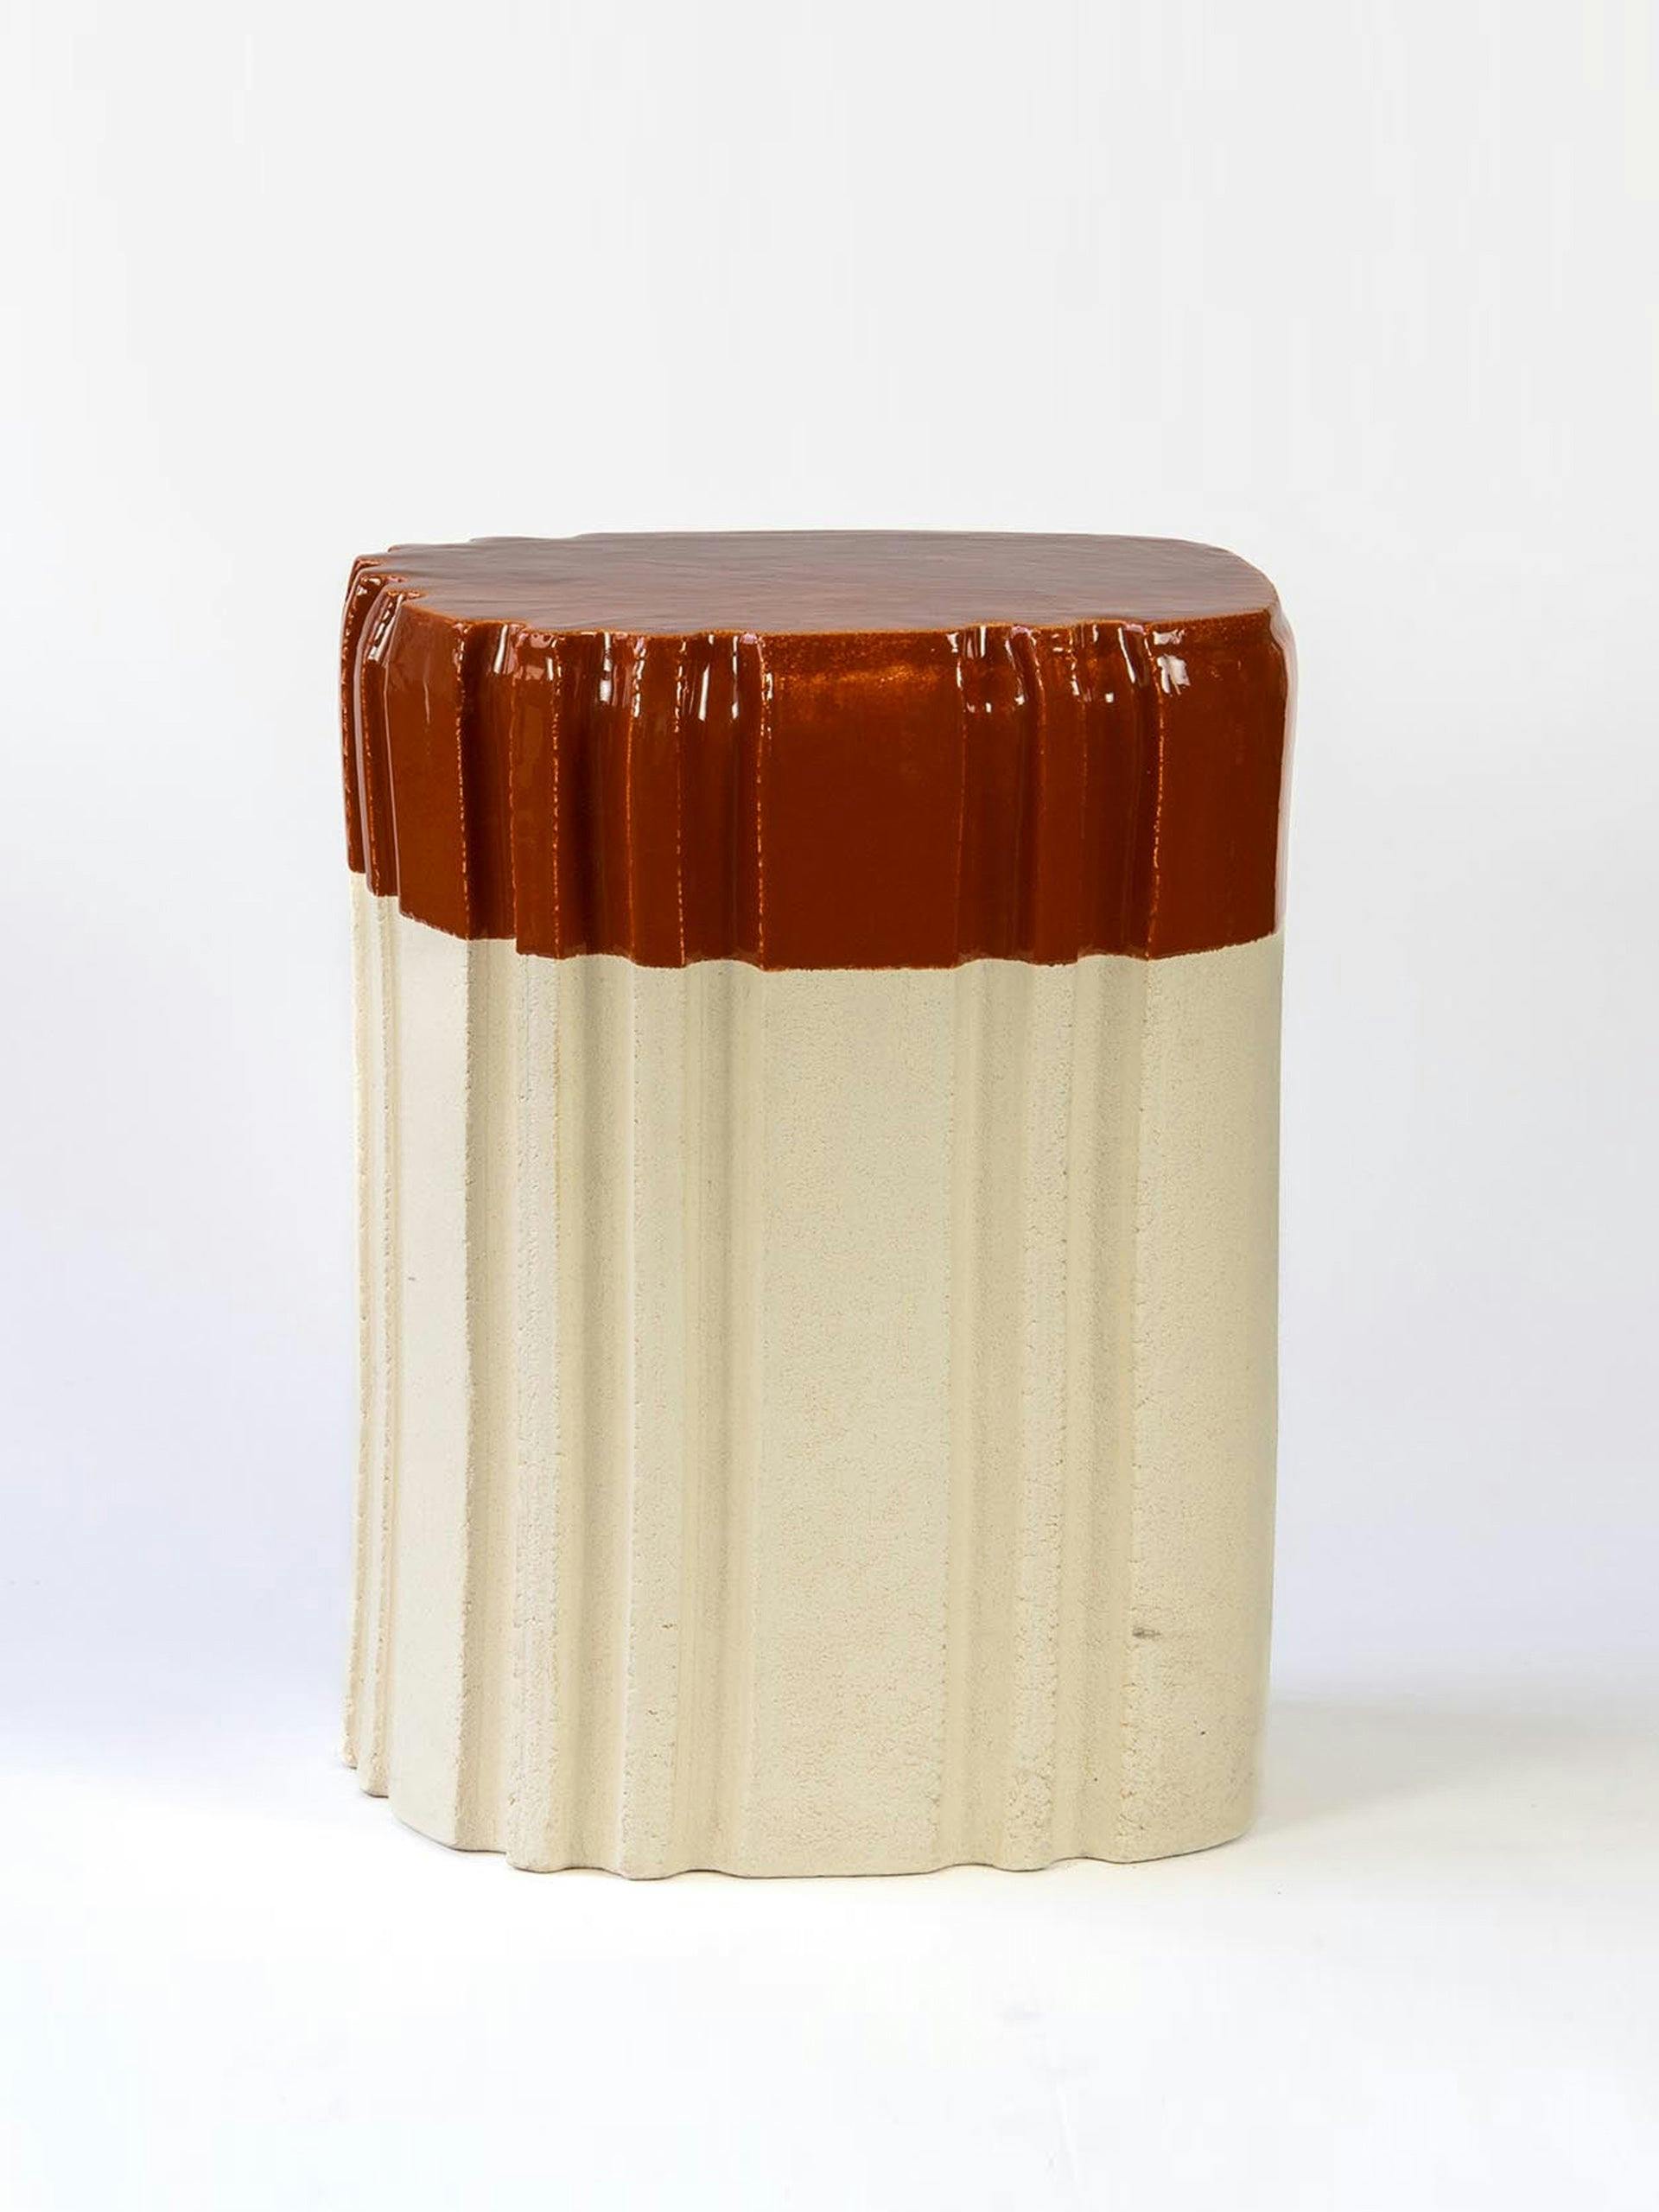 Ceramic dipped-glaze stool